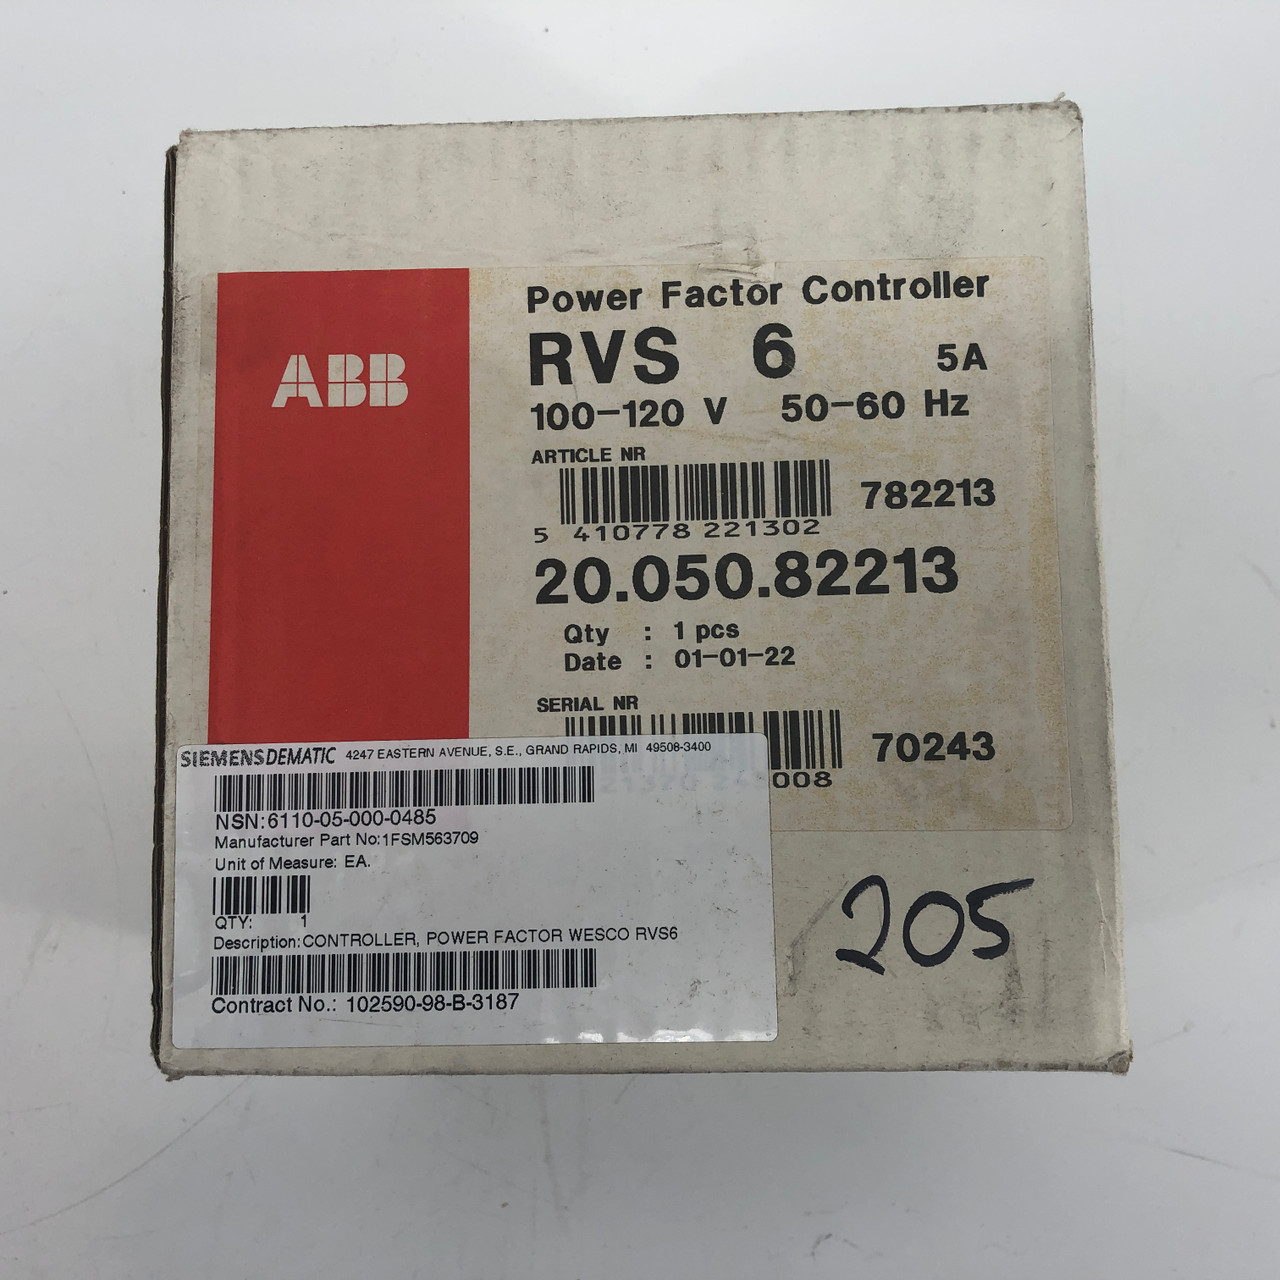 ABB 20.050.82213 RVS 6 POWER FACTOR CONTROLLER - NEW